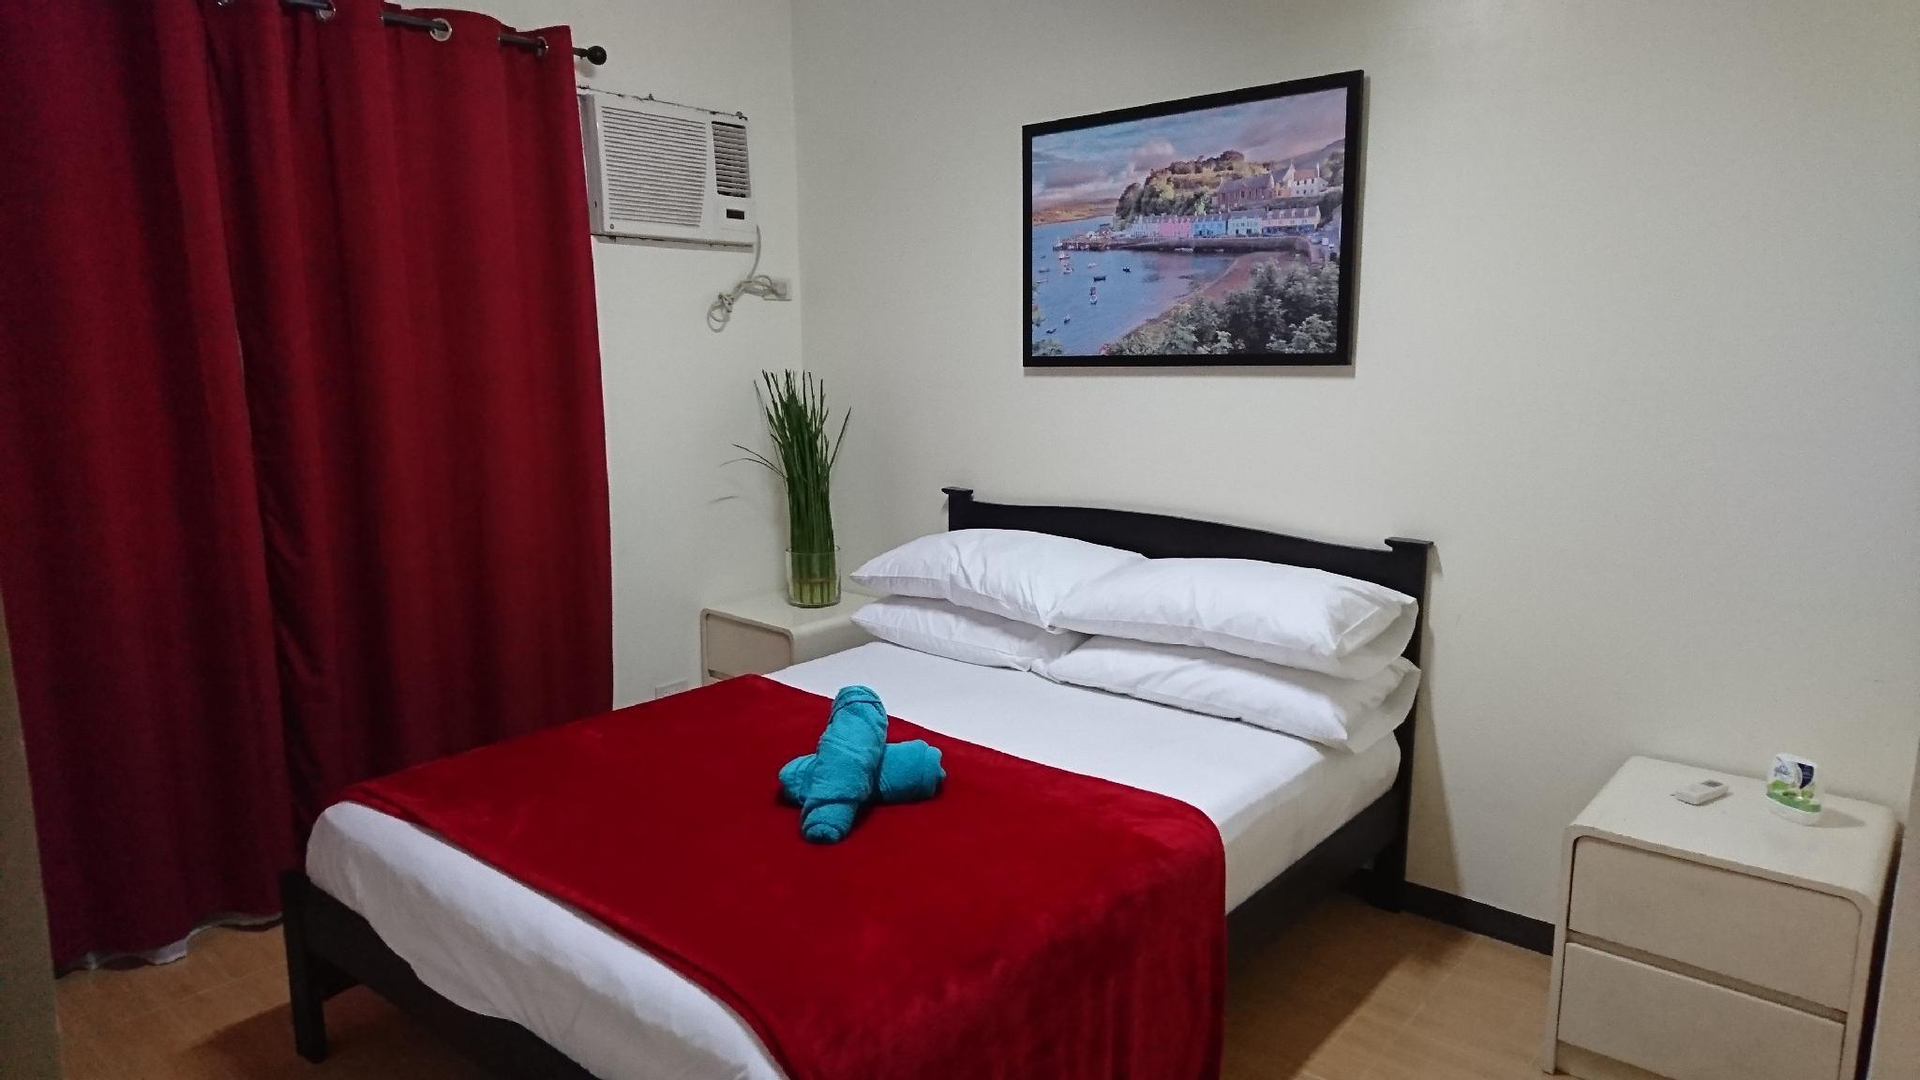 Bedroom 1, Tagaytay | 2BR | 6 adults MAX, Tagaytay City